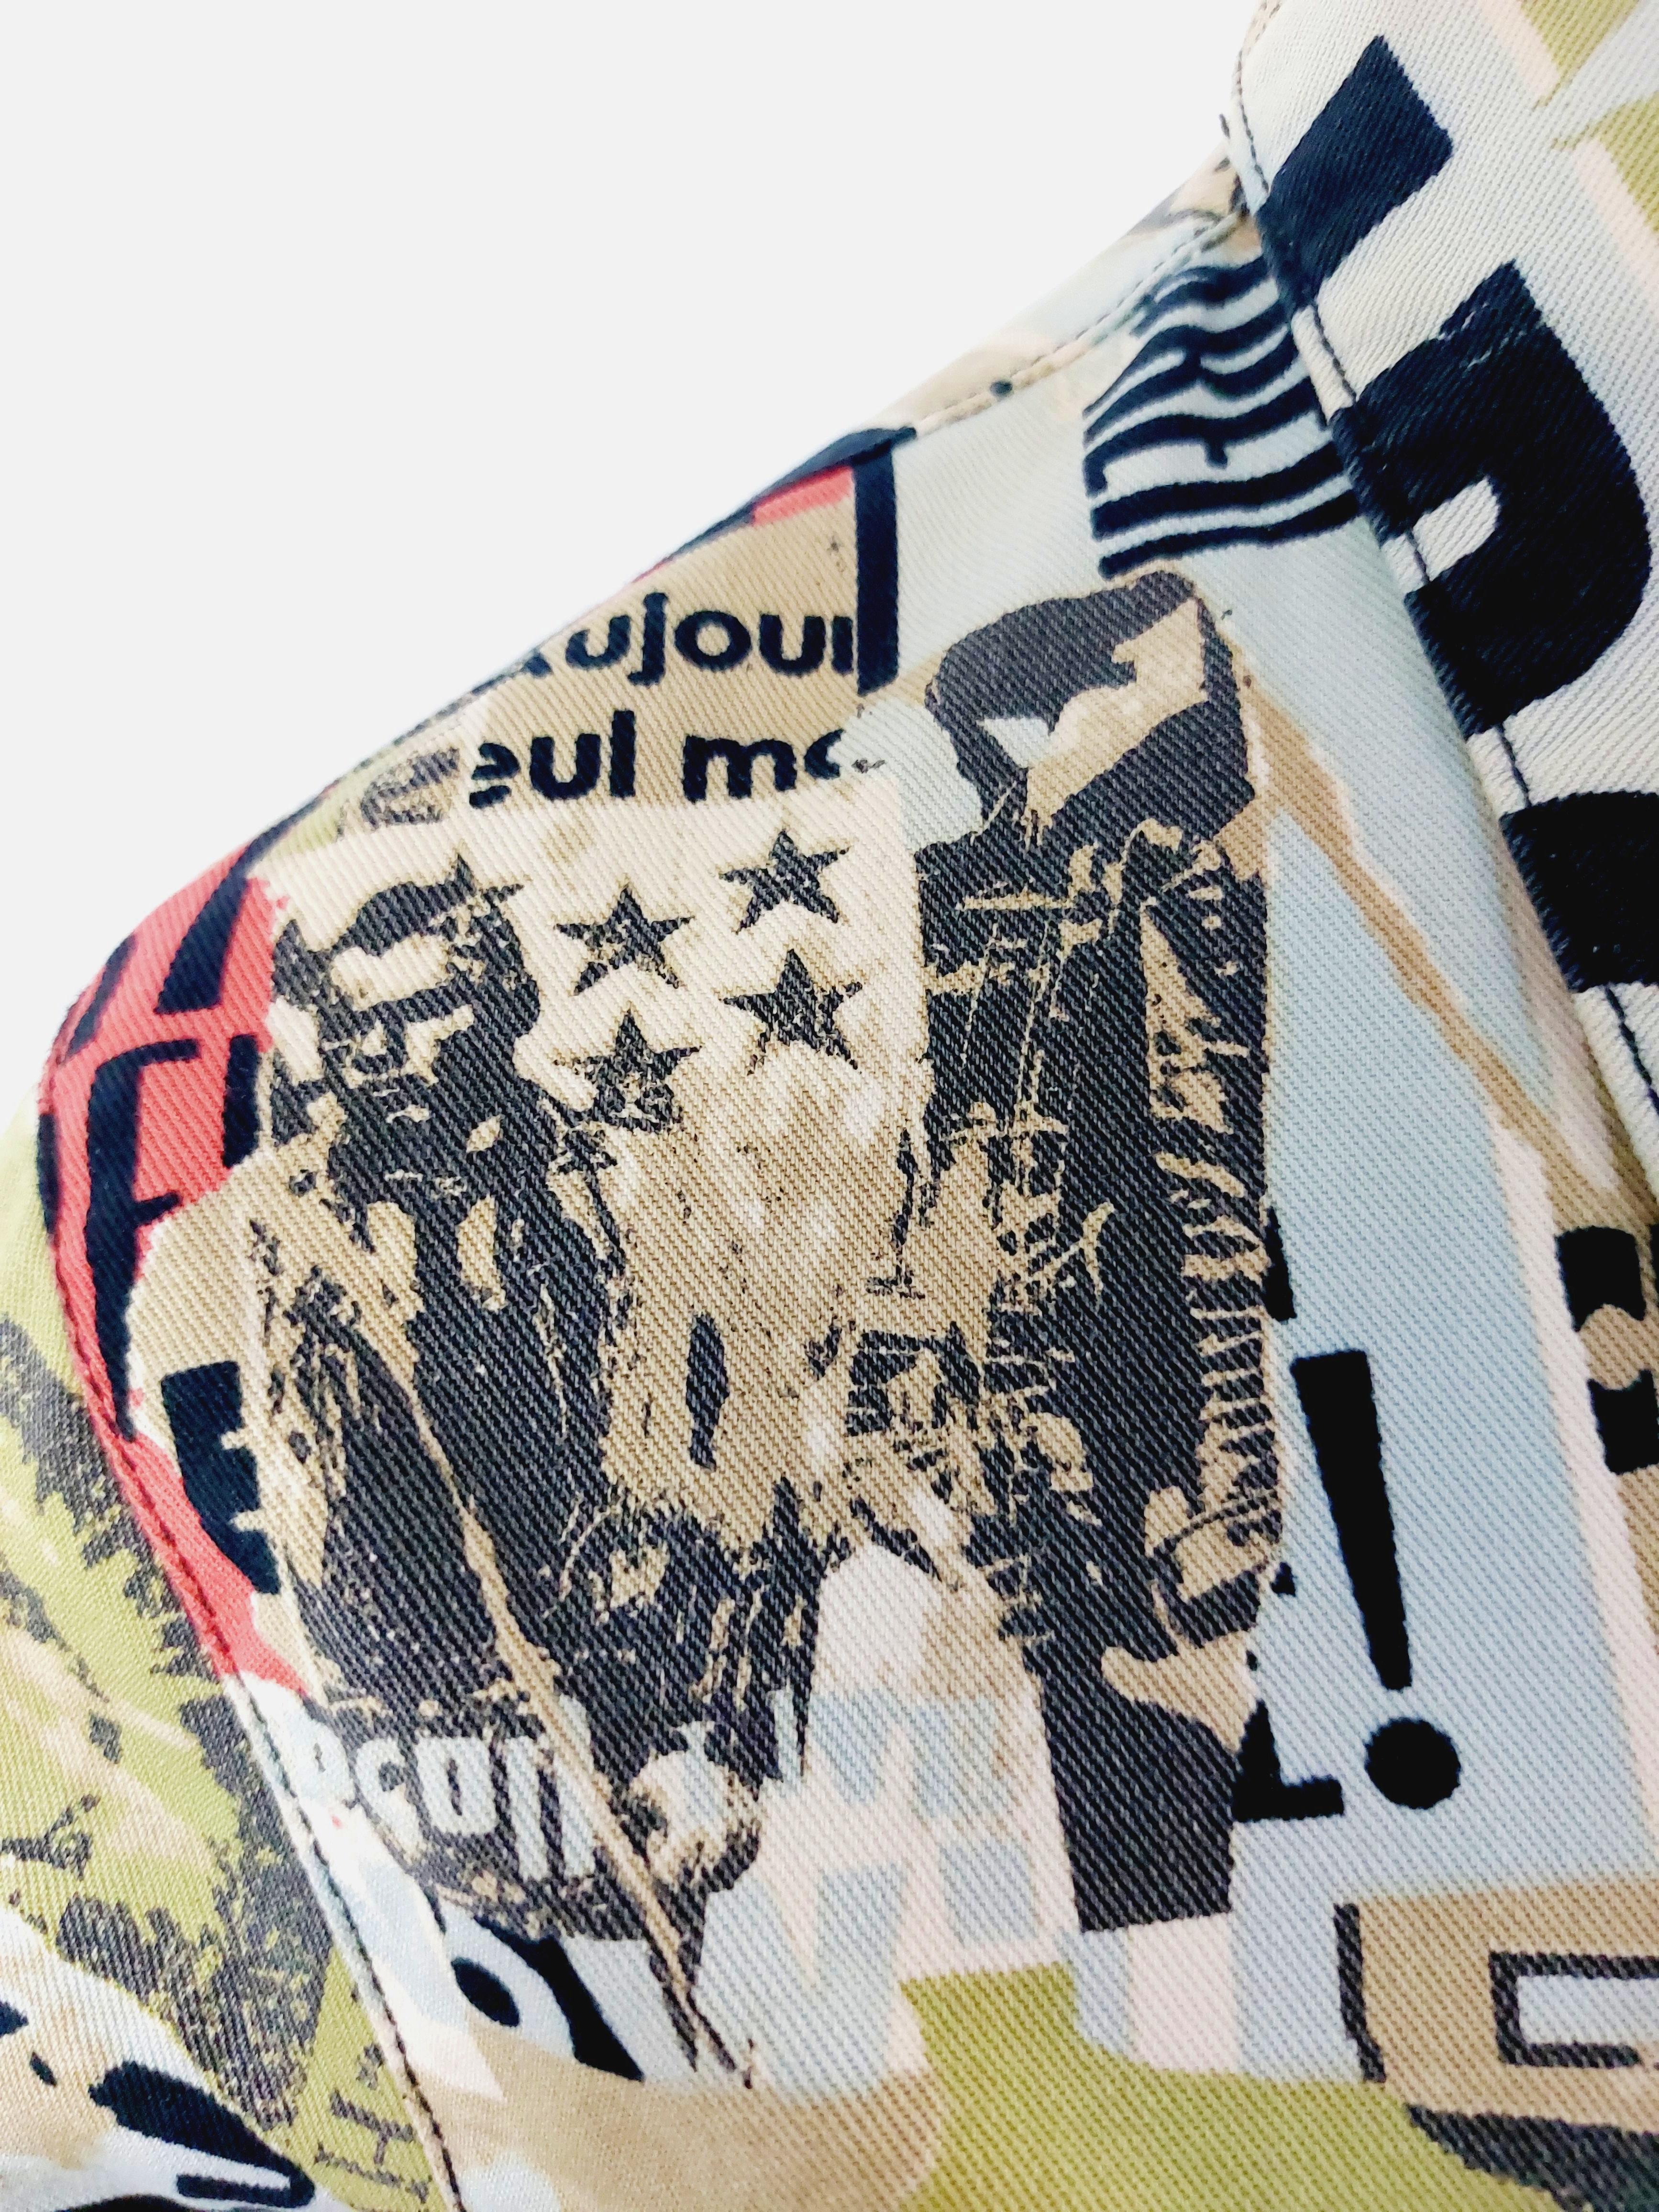 90s Gaultier Jeans Anarchy Punk Rock Fight Racism Tattoo Club Kid Denim Jacket For Sale 2